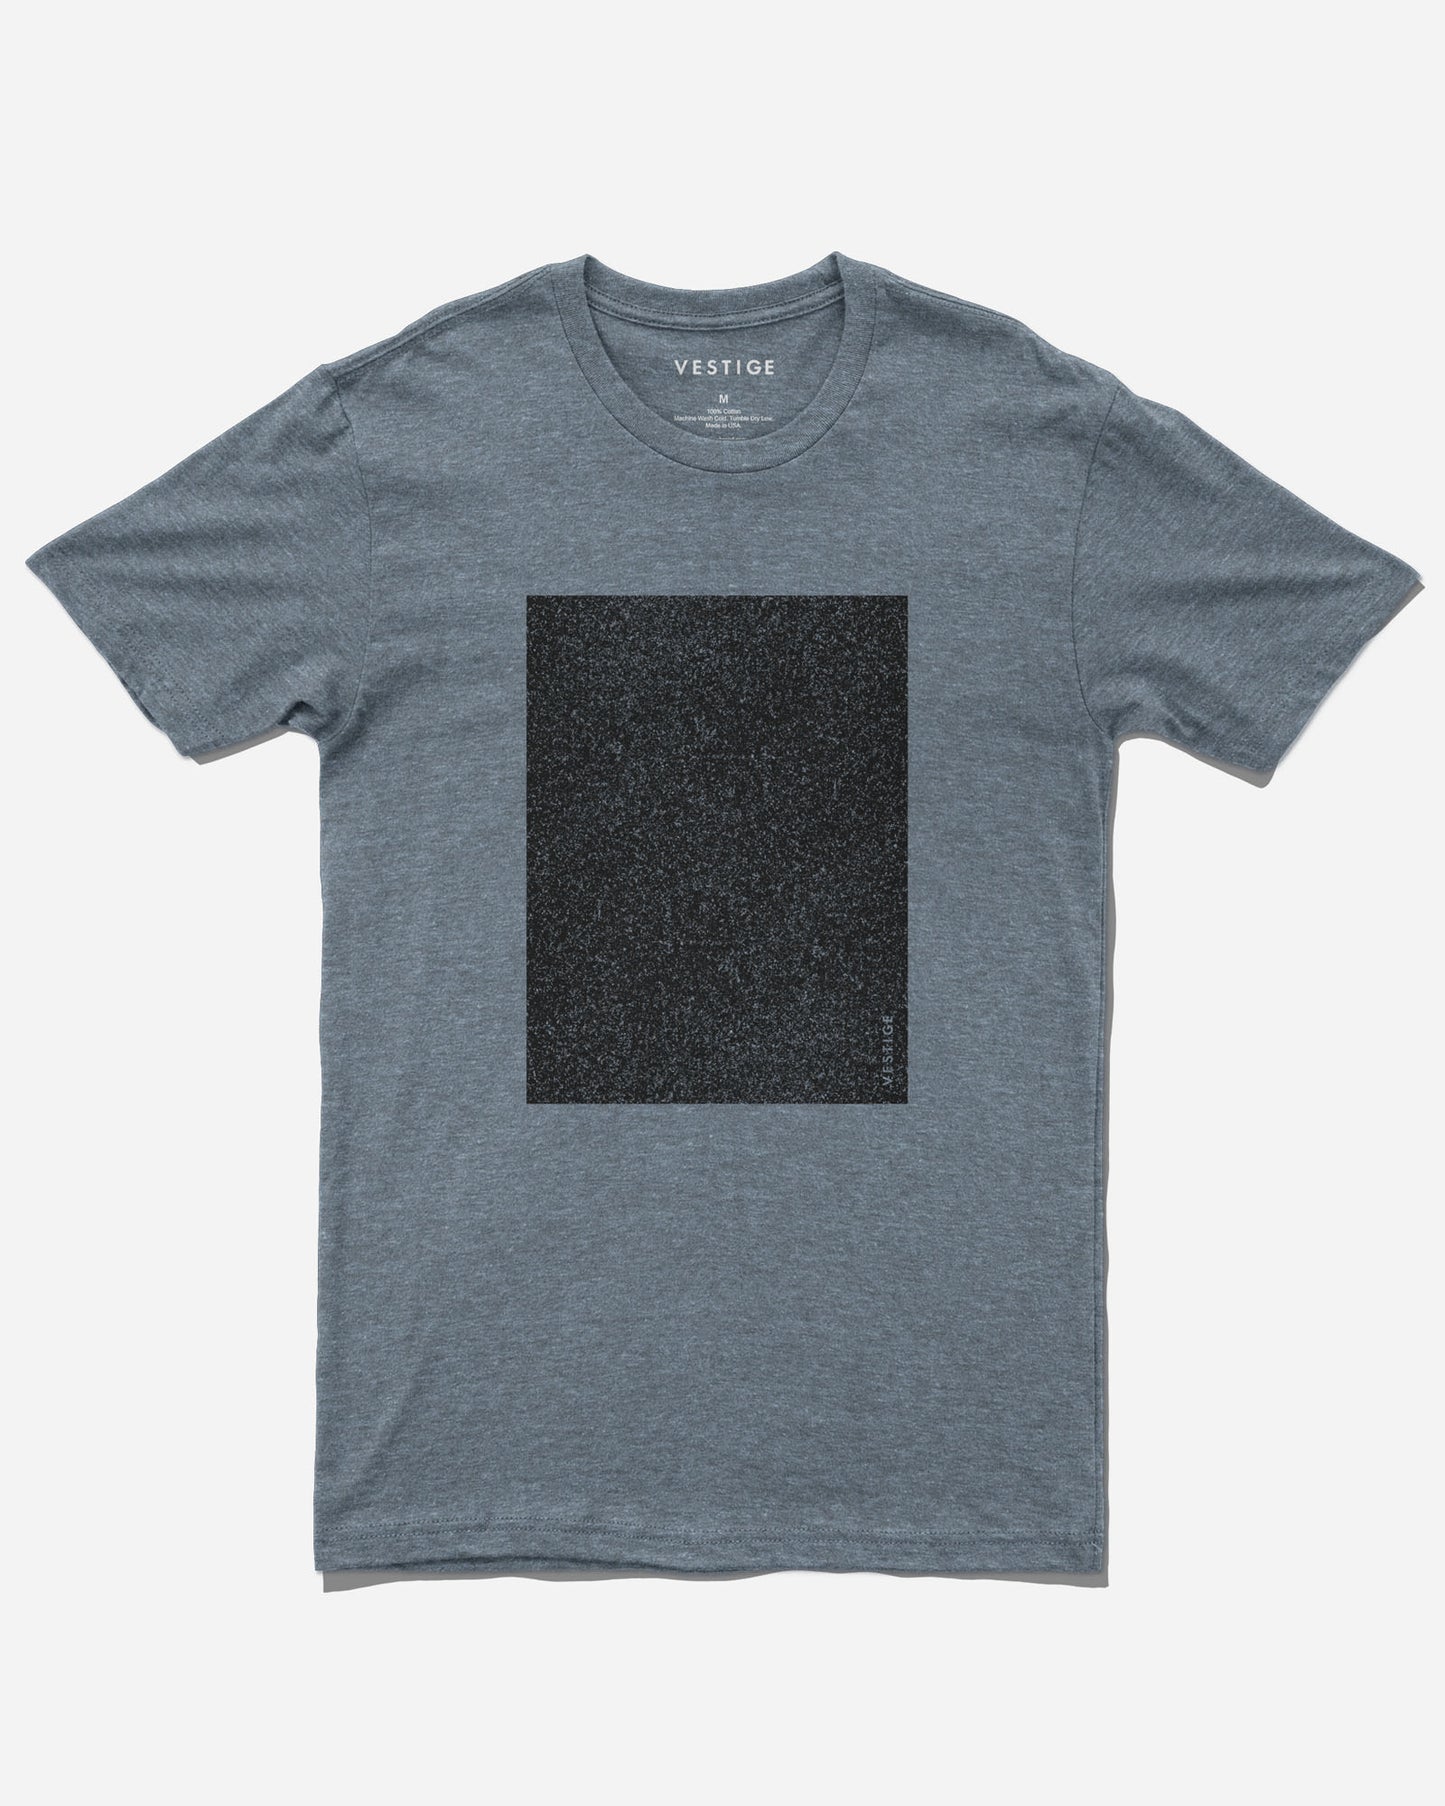 Noise Box T-Shirt, Indigo Tri-Blend